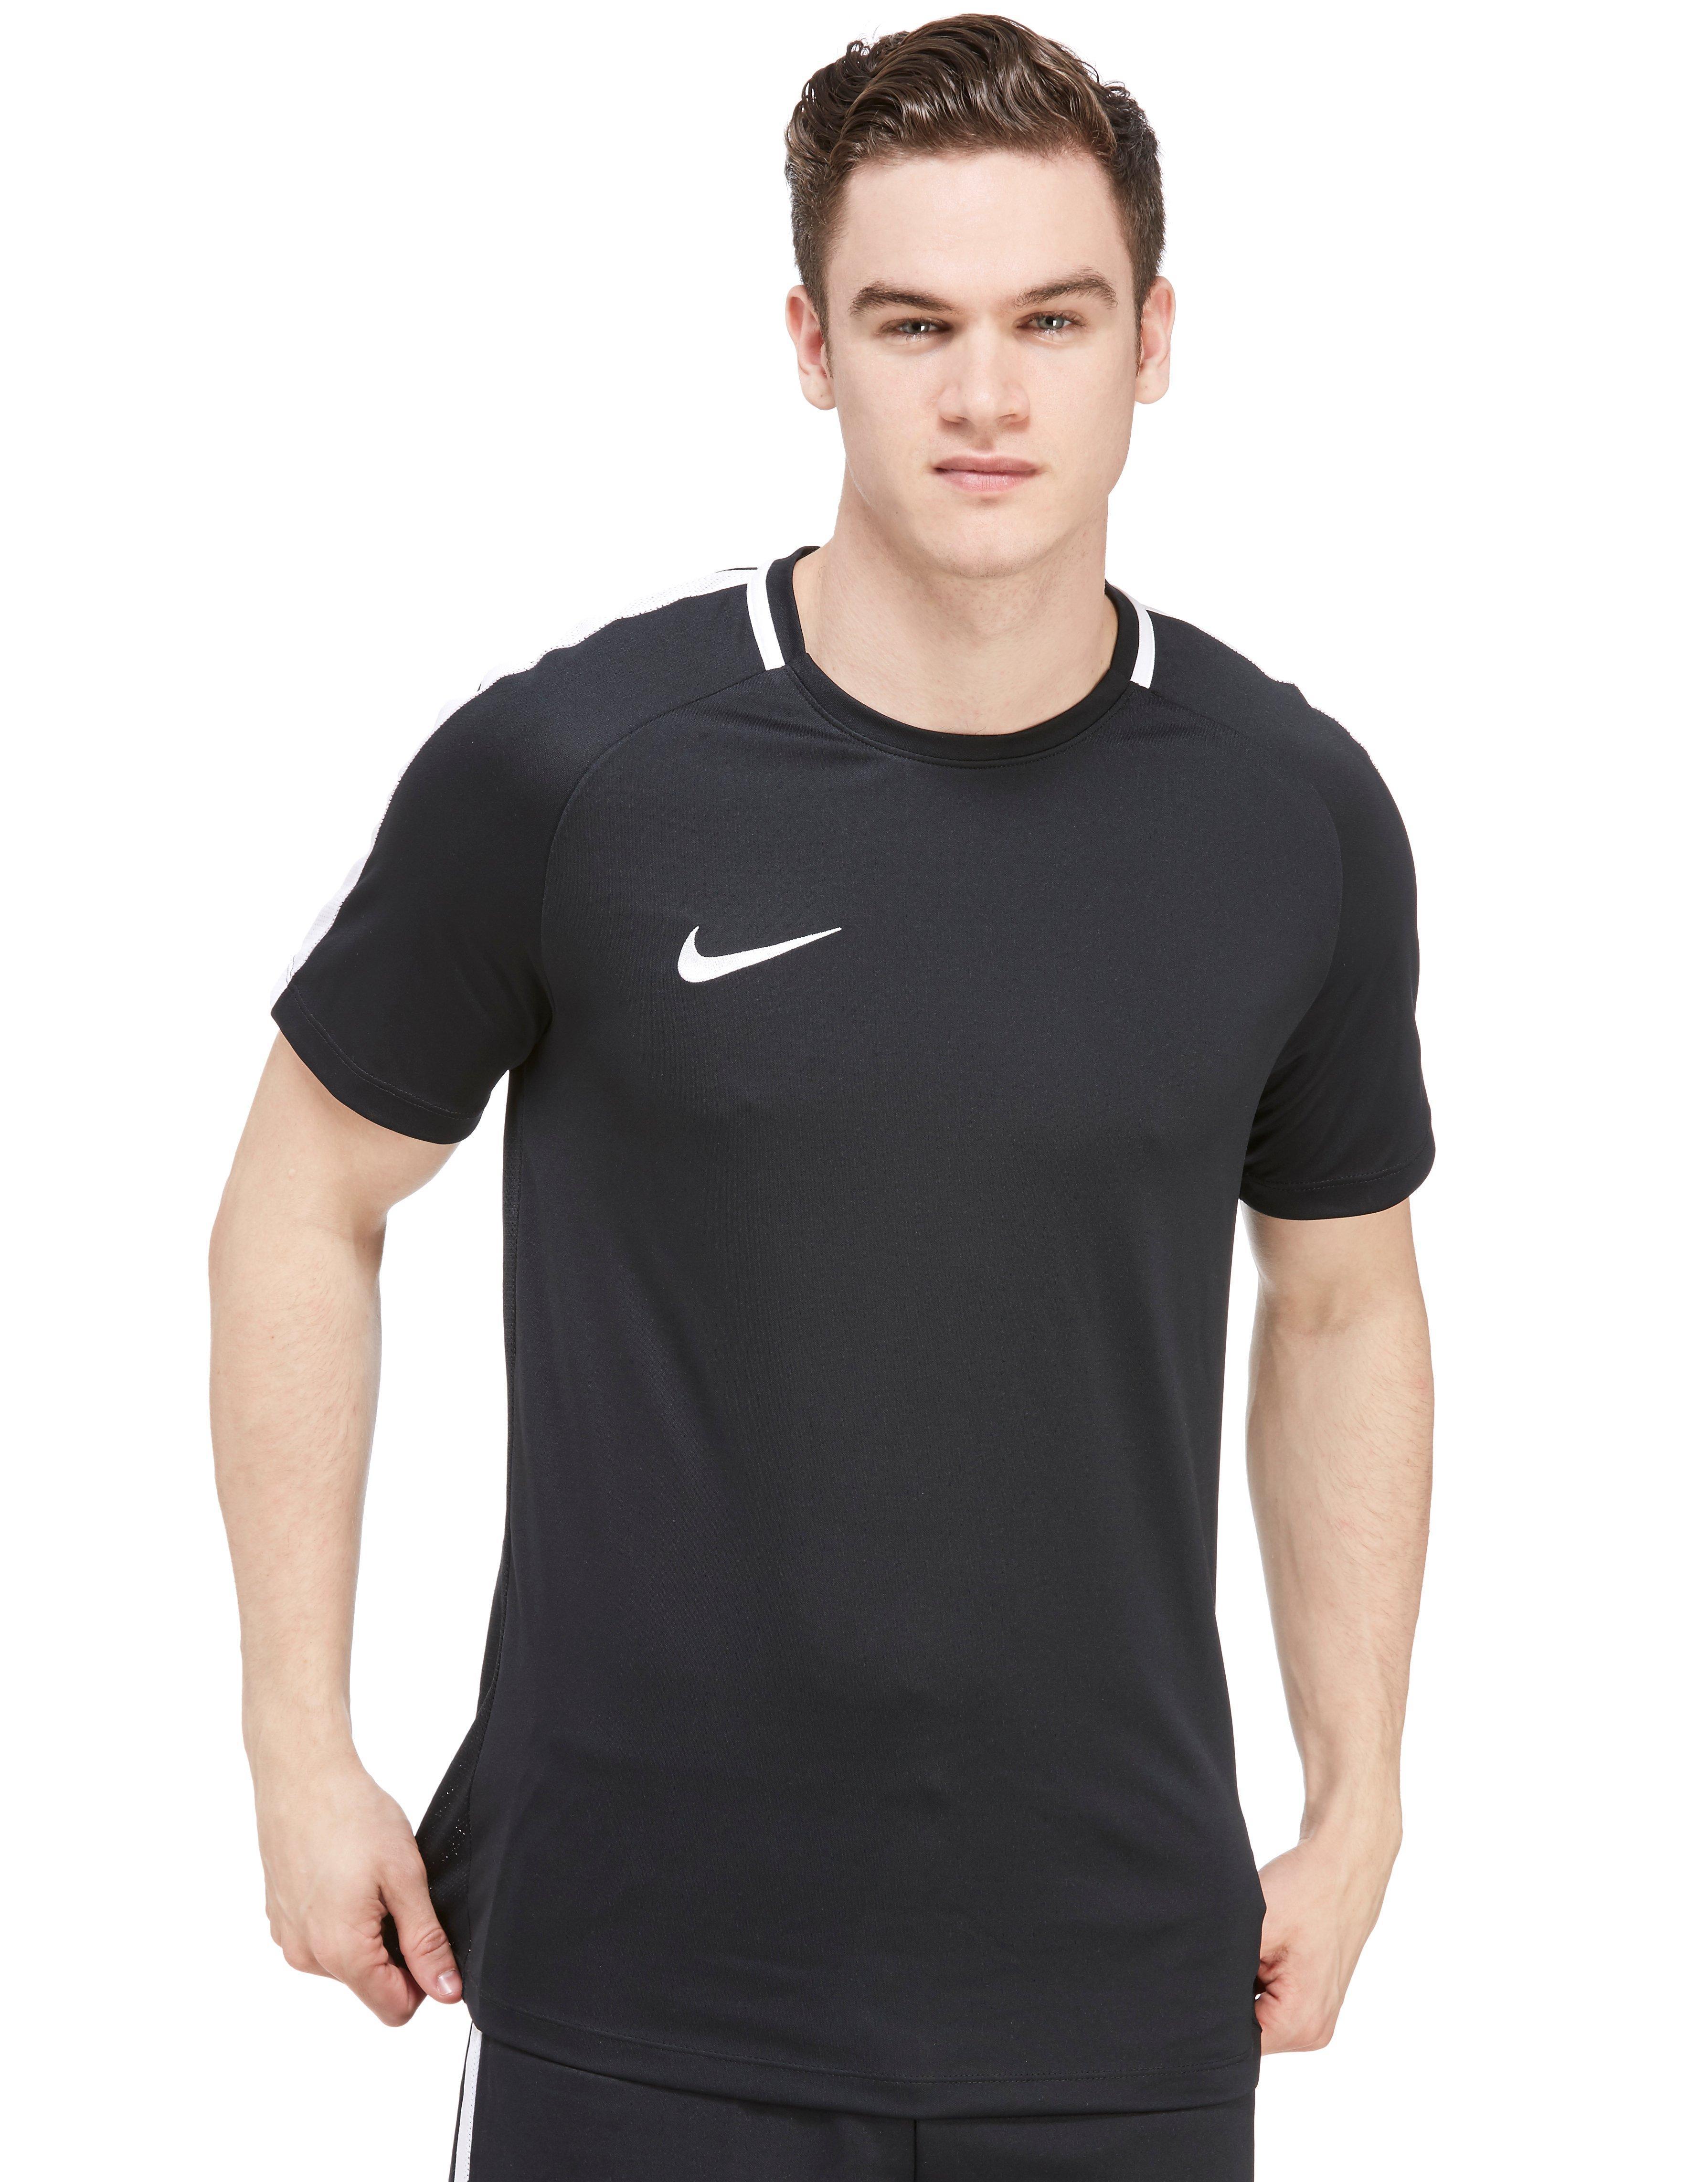 Lyst - Nike Academy 17 T-shirt in Black for Men